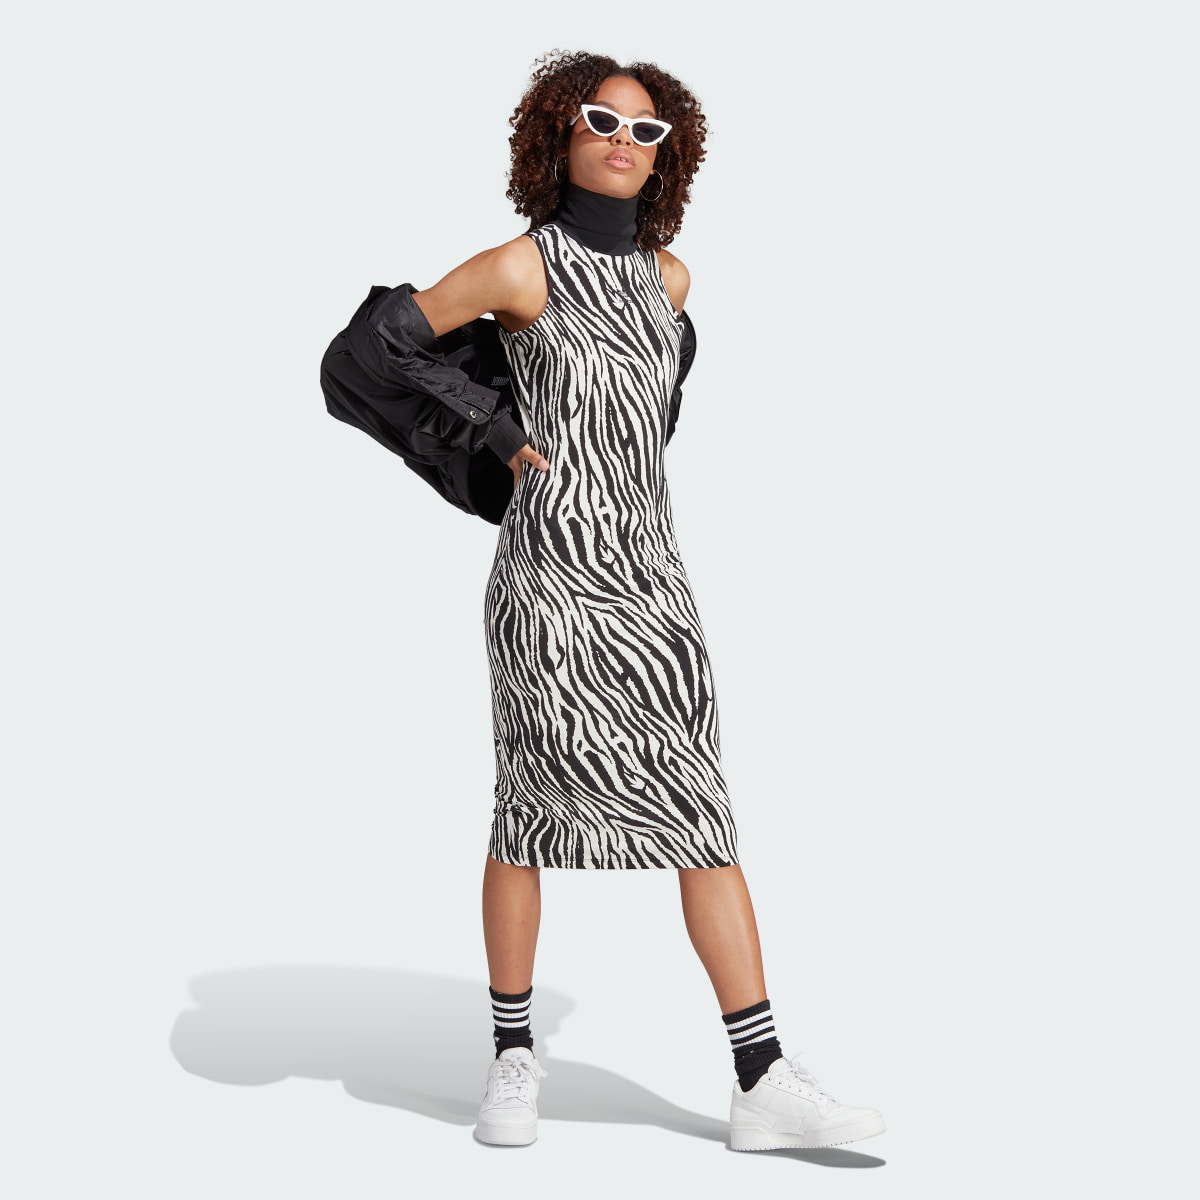 Adidas Allover Zebra Animal Print Dress. 4